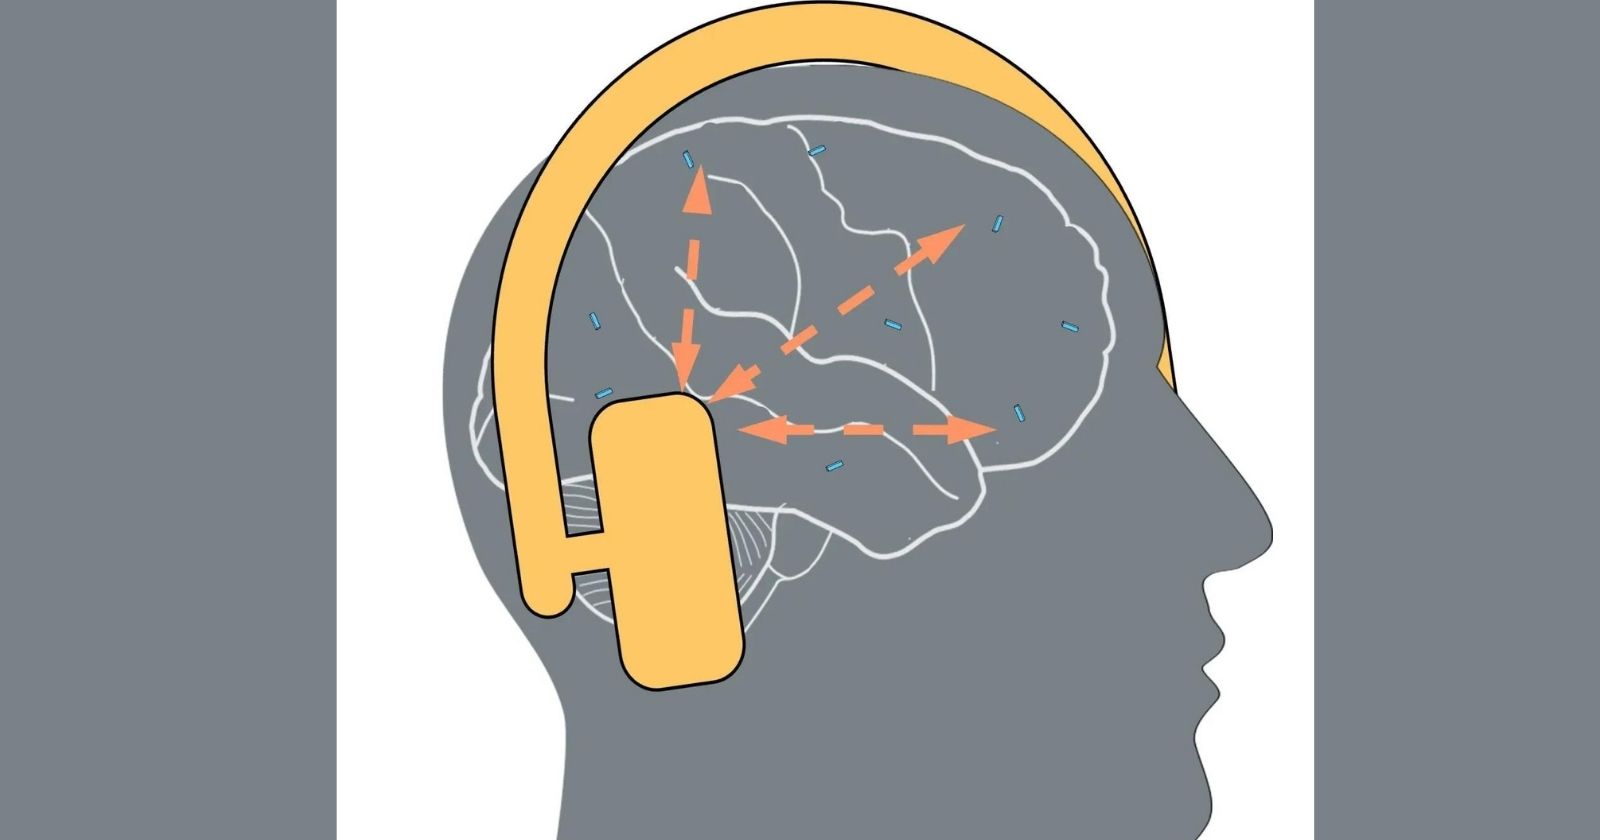 Brain internet is coming like a science fiction scene!